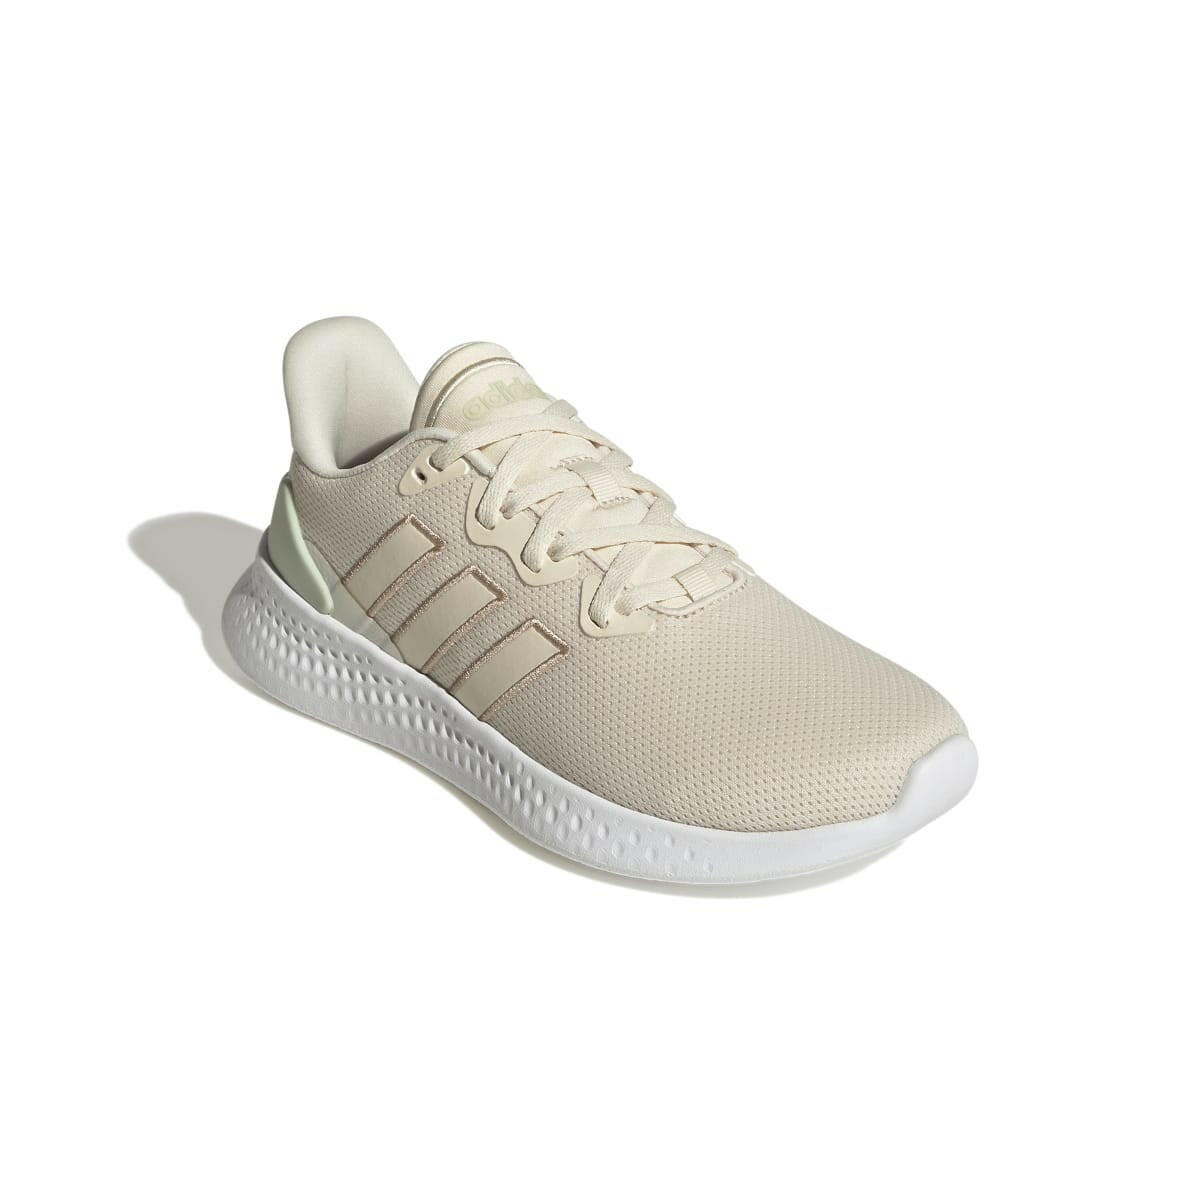 ADIDAS GZ6773 PUREMOTION SE WMN'S (Medium) White/Beige/Green Textile Running Shoes - GENUINE AUTHENTIC BRAND LLC  